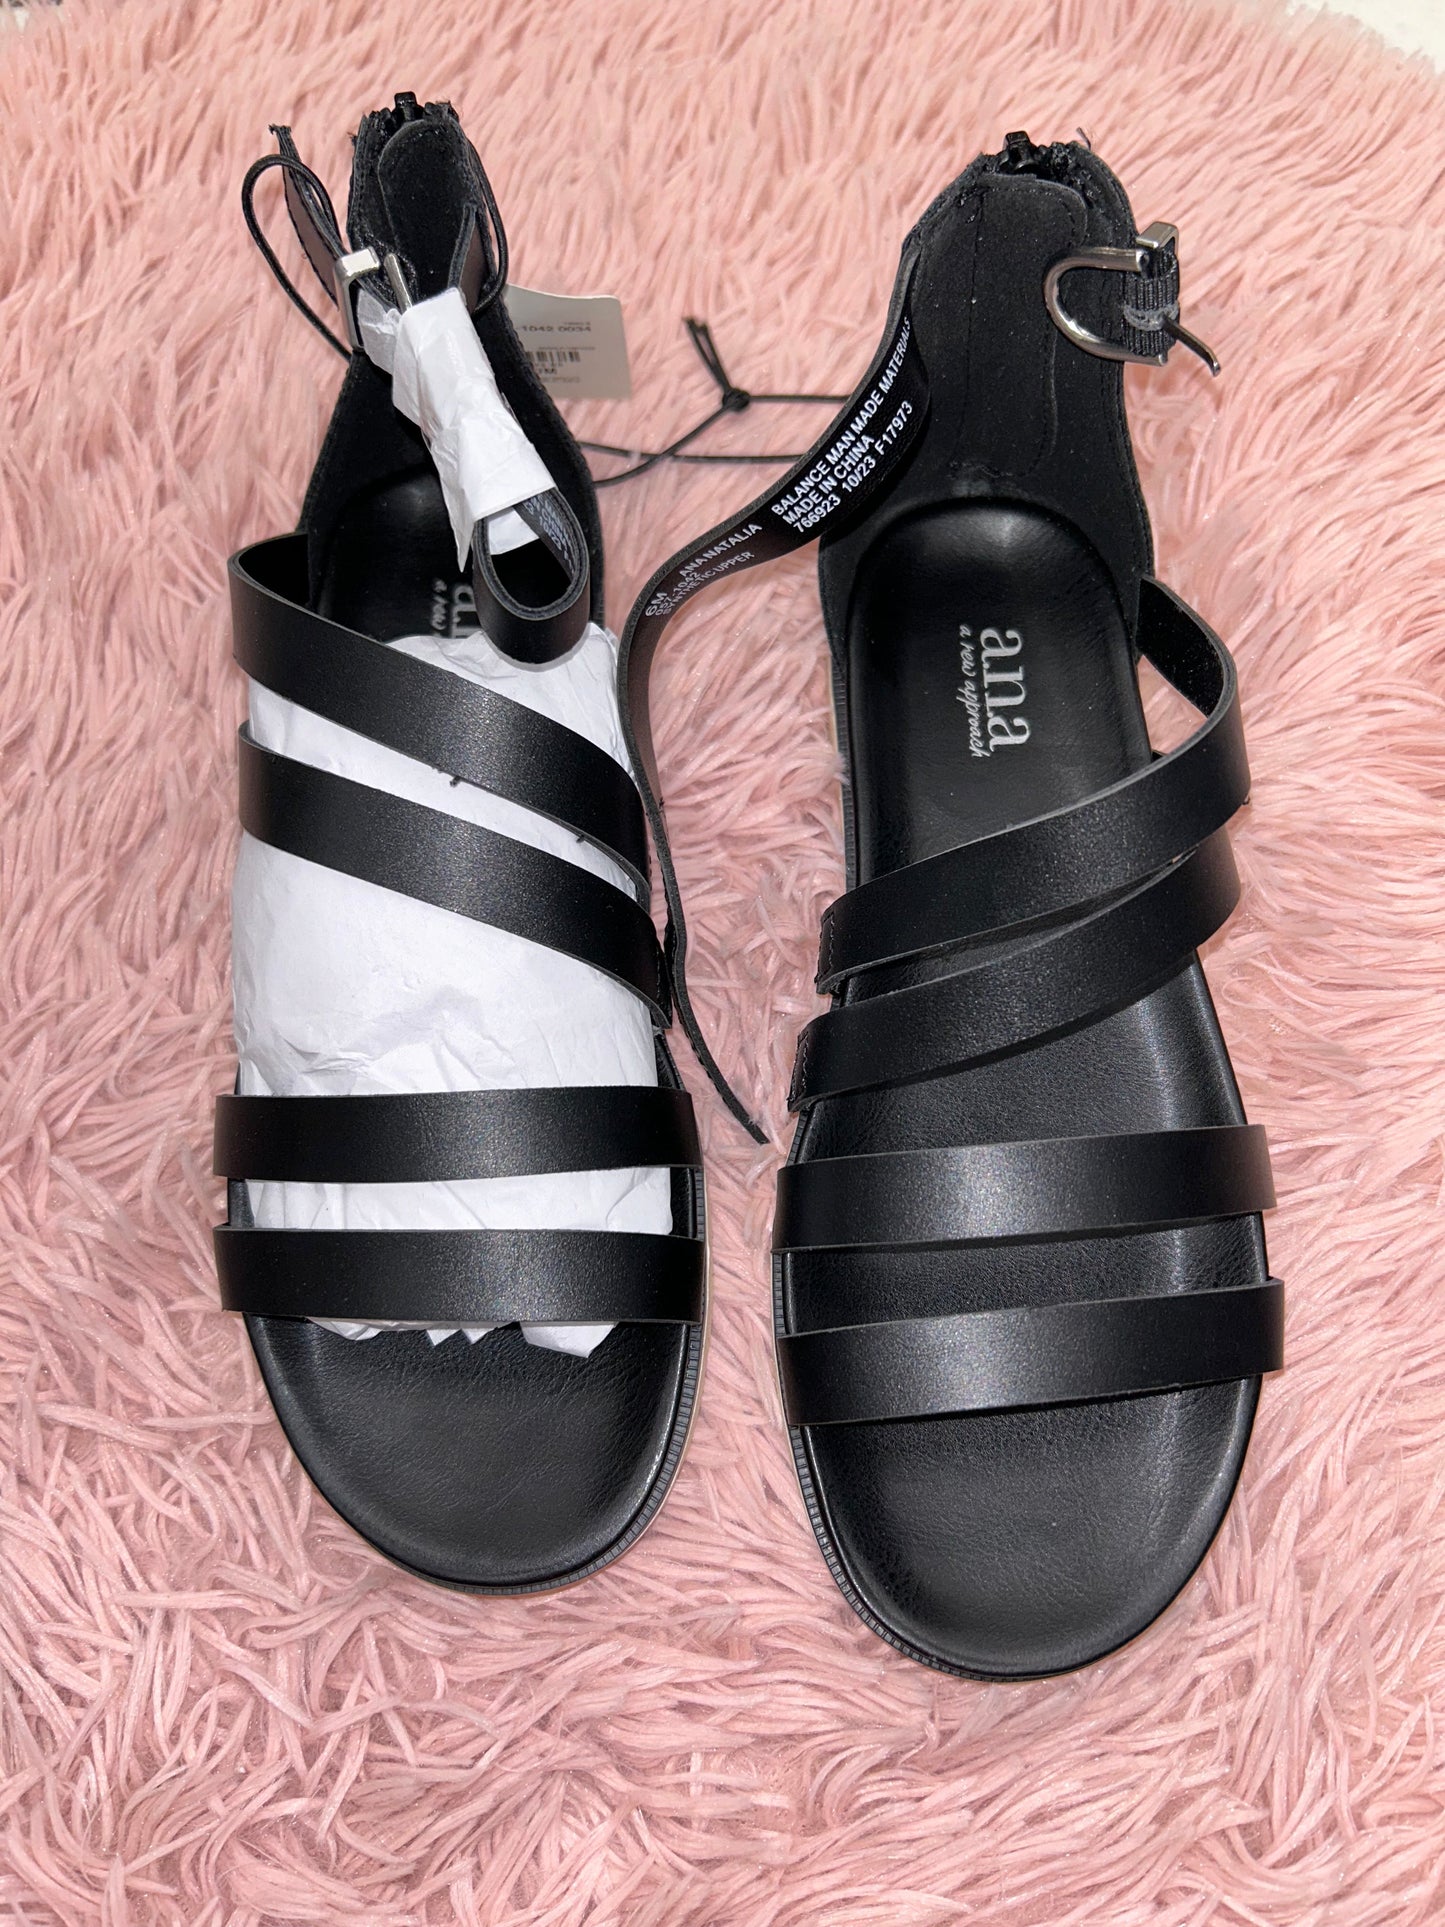 Black Sandals Flats Ana, Size 6